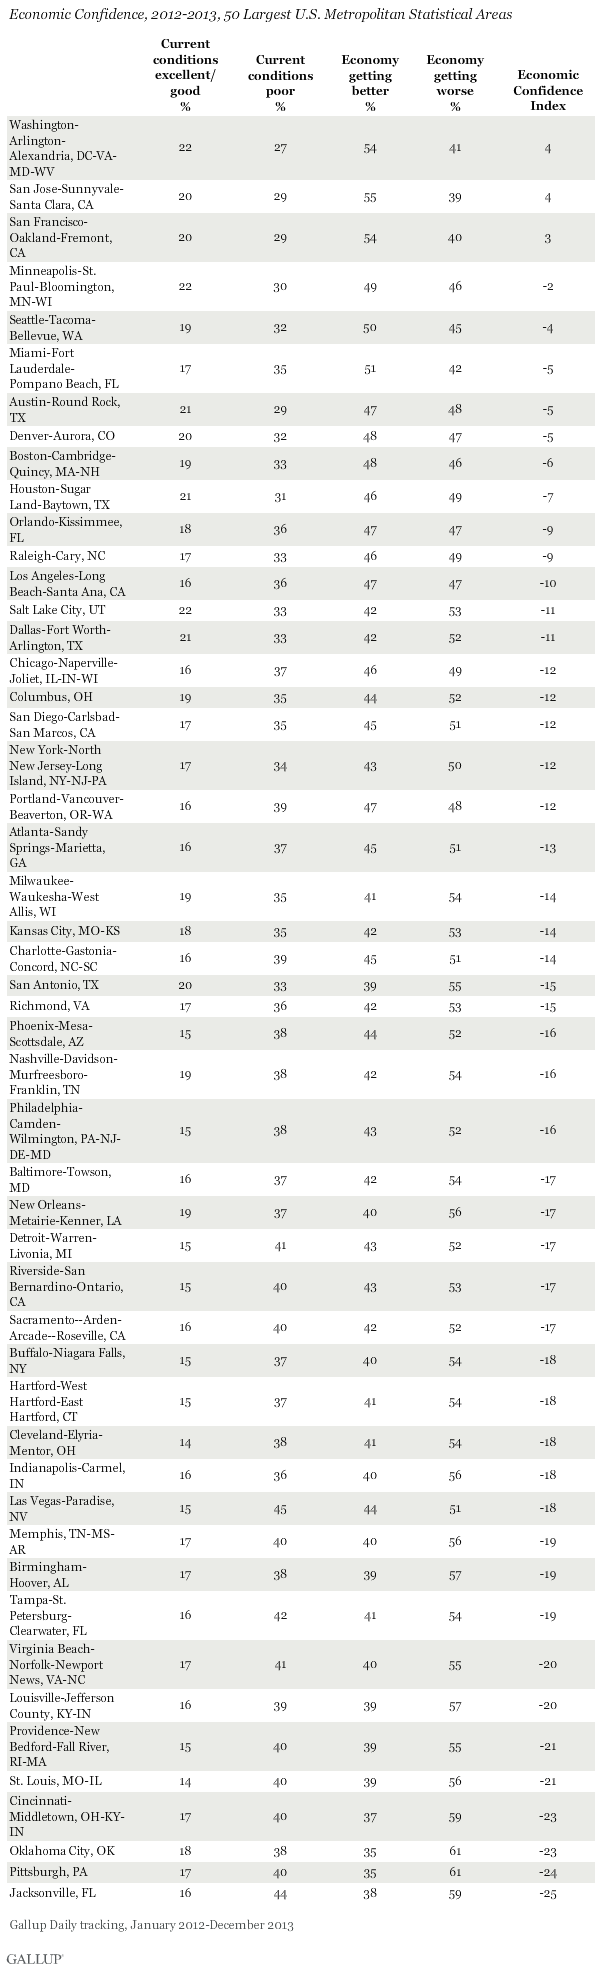 Economic Confidence, 2012-2013, 50 Largest U.S. Metropolitan Statistical Areas